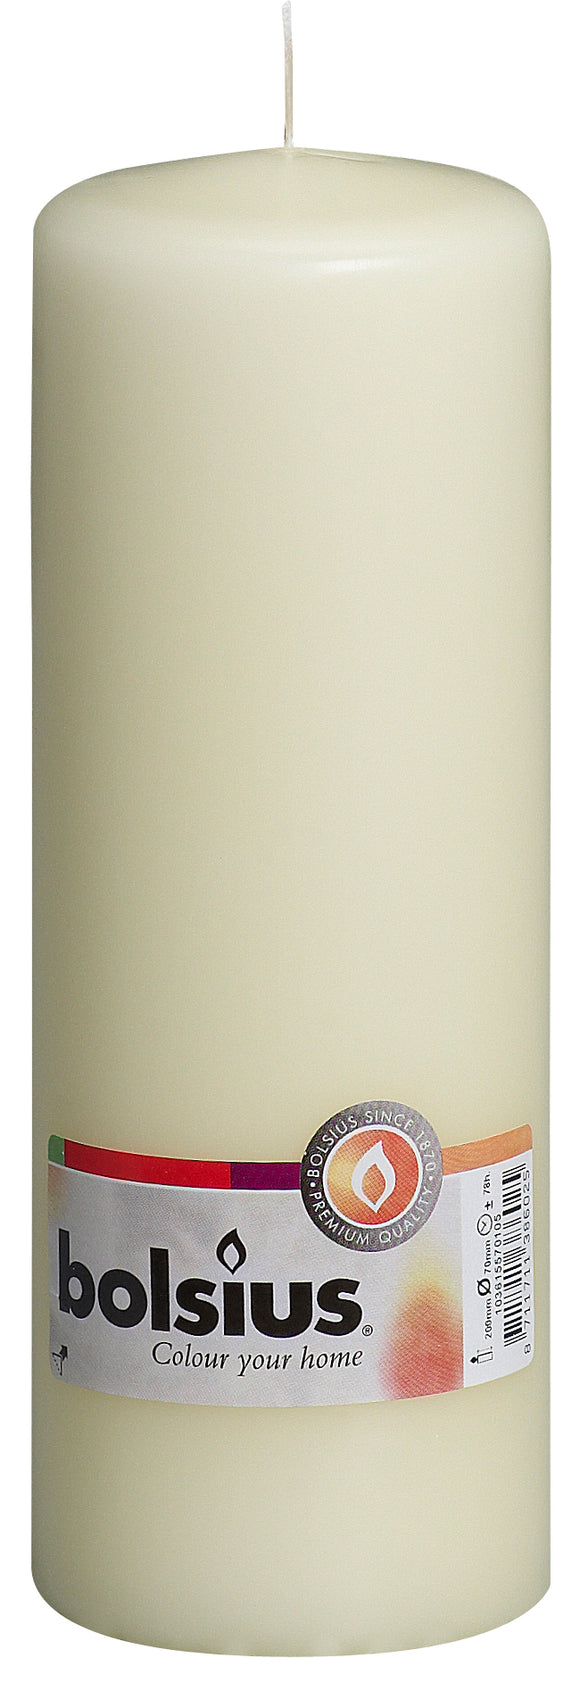 Bolsius Ivory Pillar Candle - 200mm x 70mm